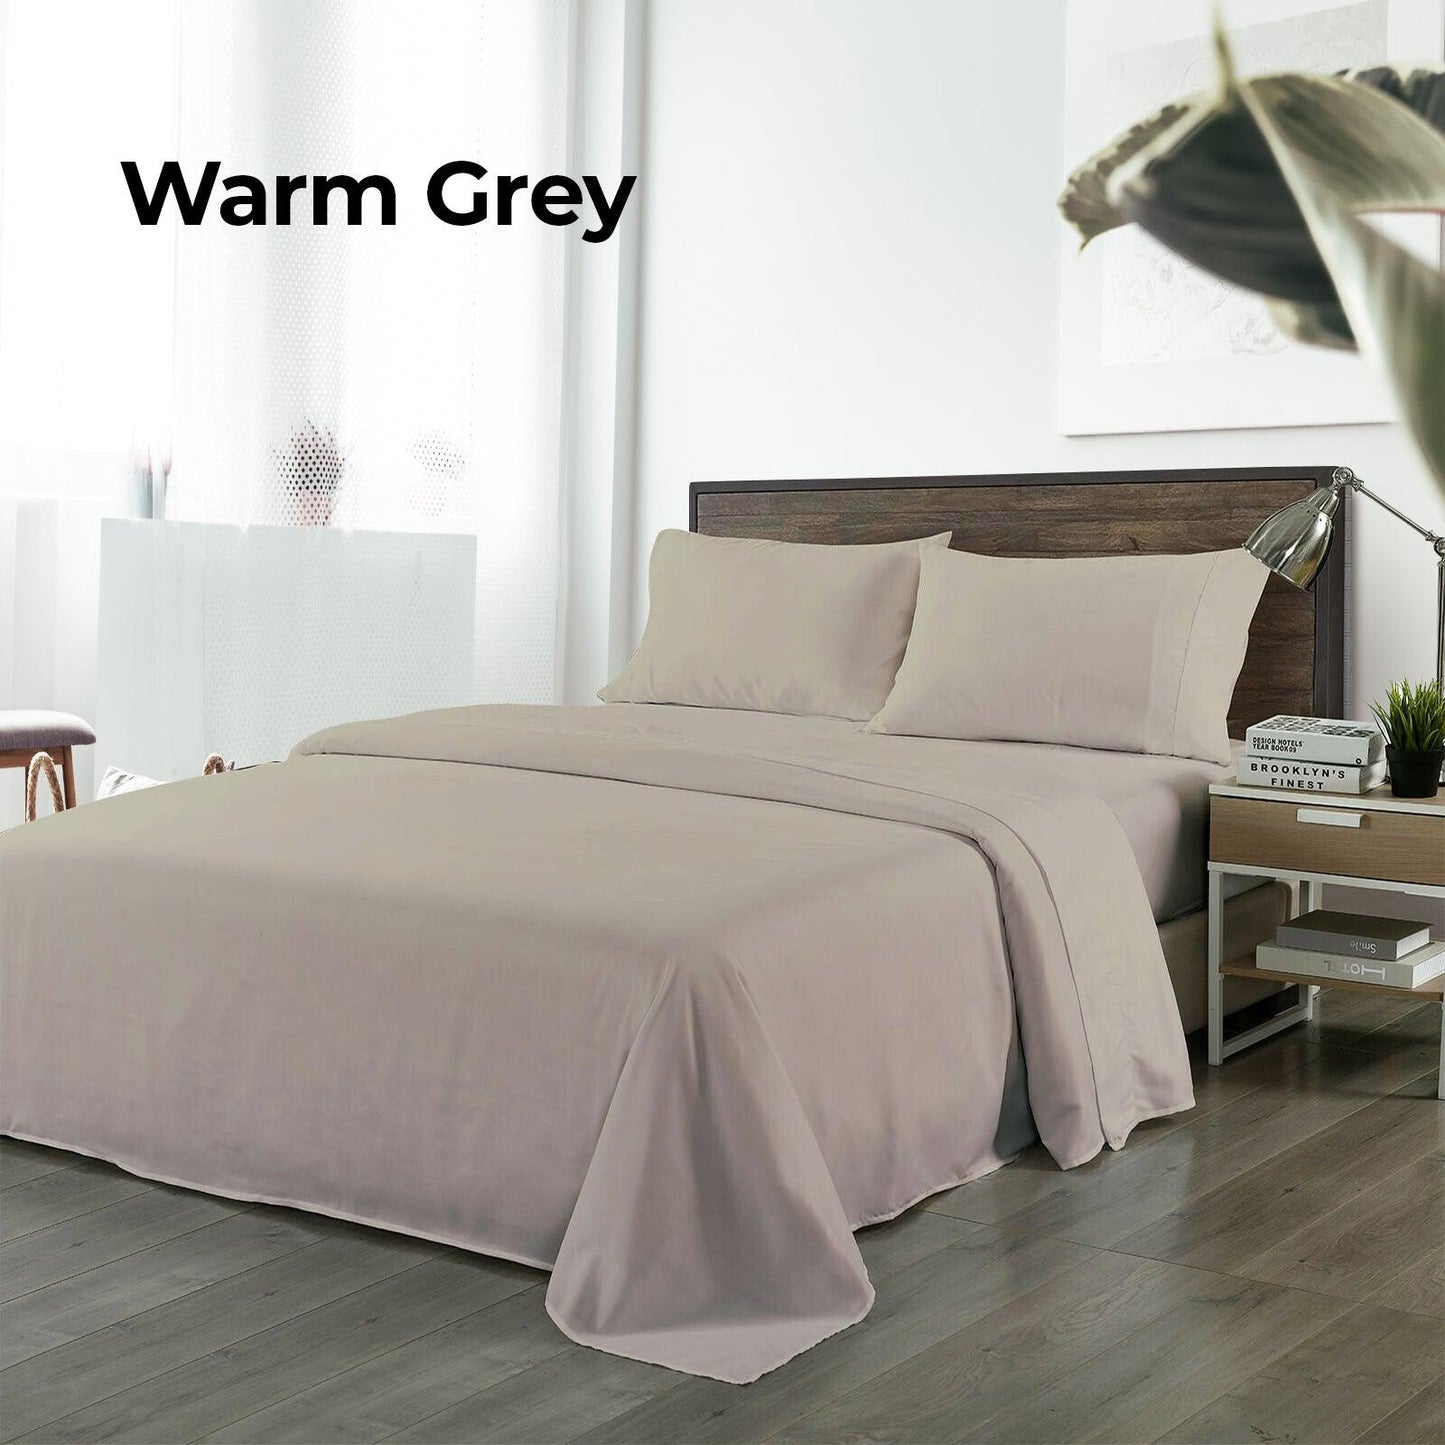 Royal Comfort Bamboo Blended Sheet & Pillowcases Set 1000TC Ultra Soft Bedding - King - Warm Grey